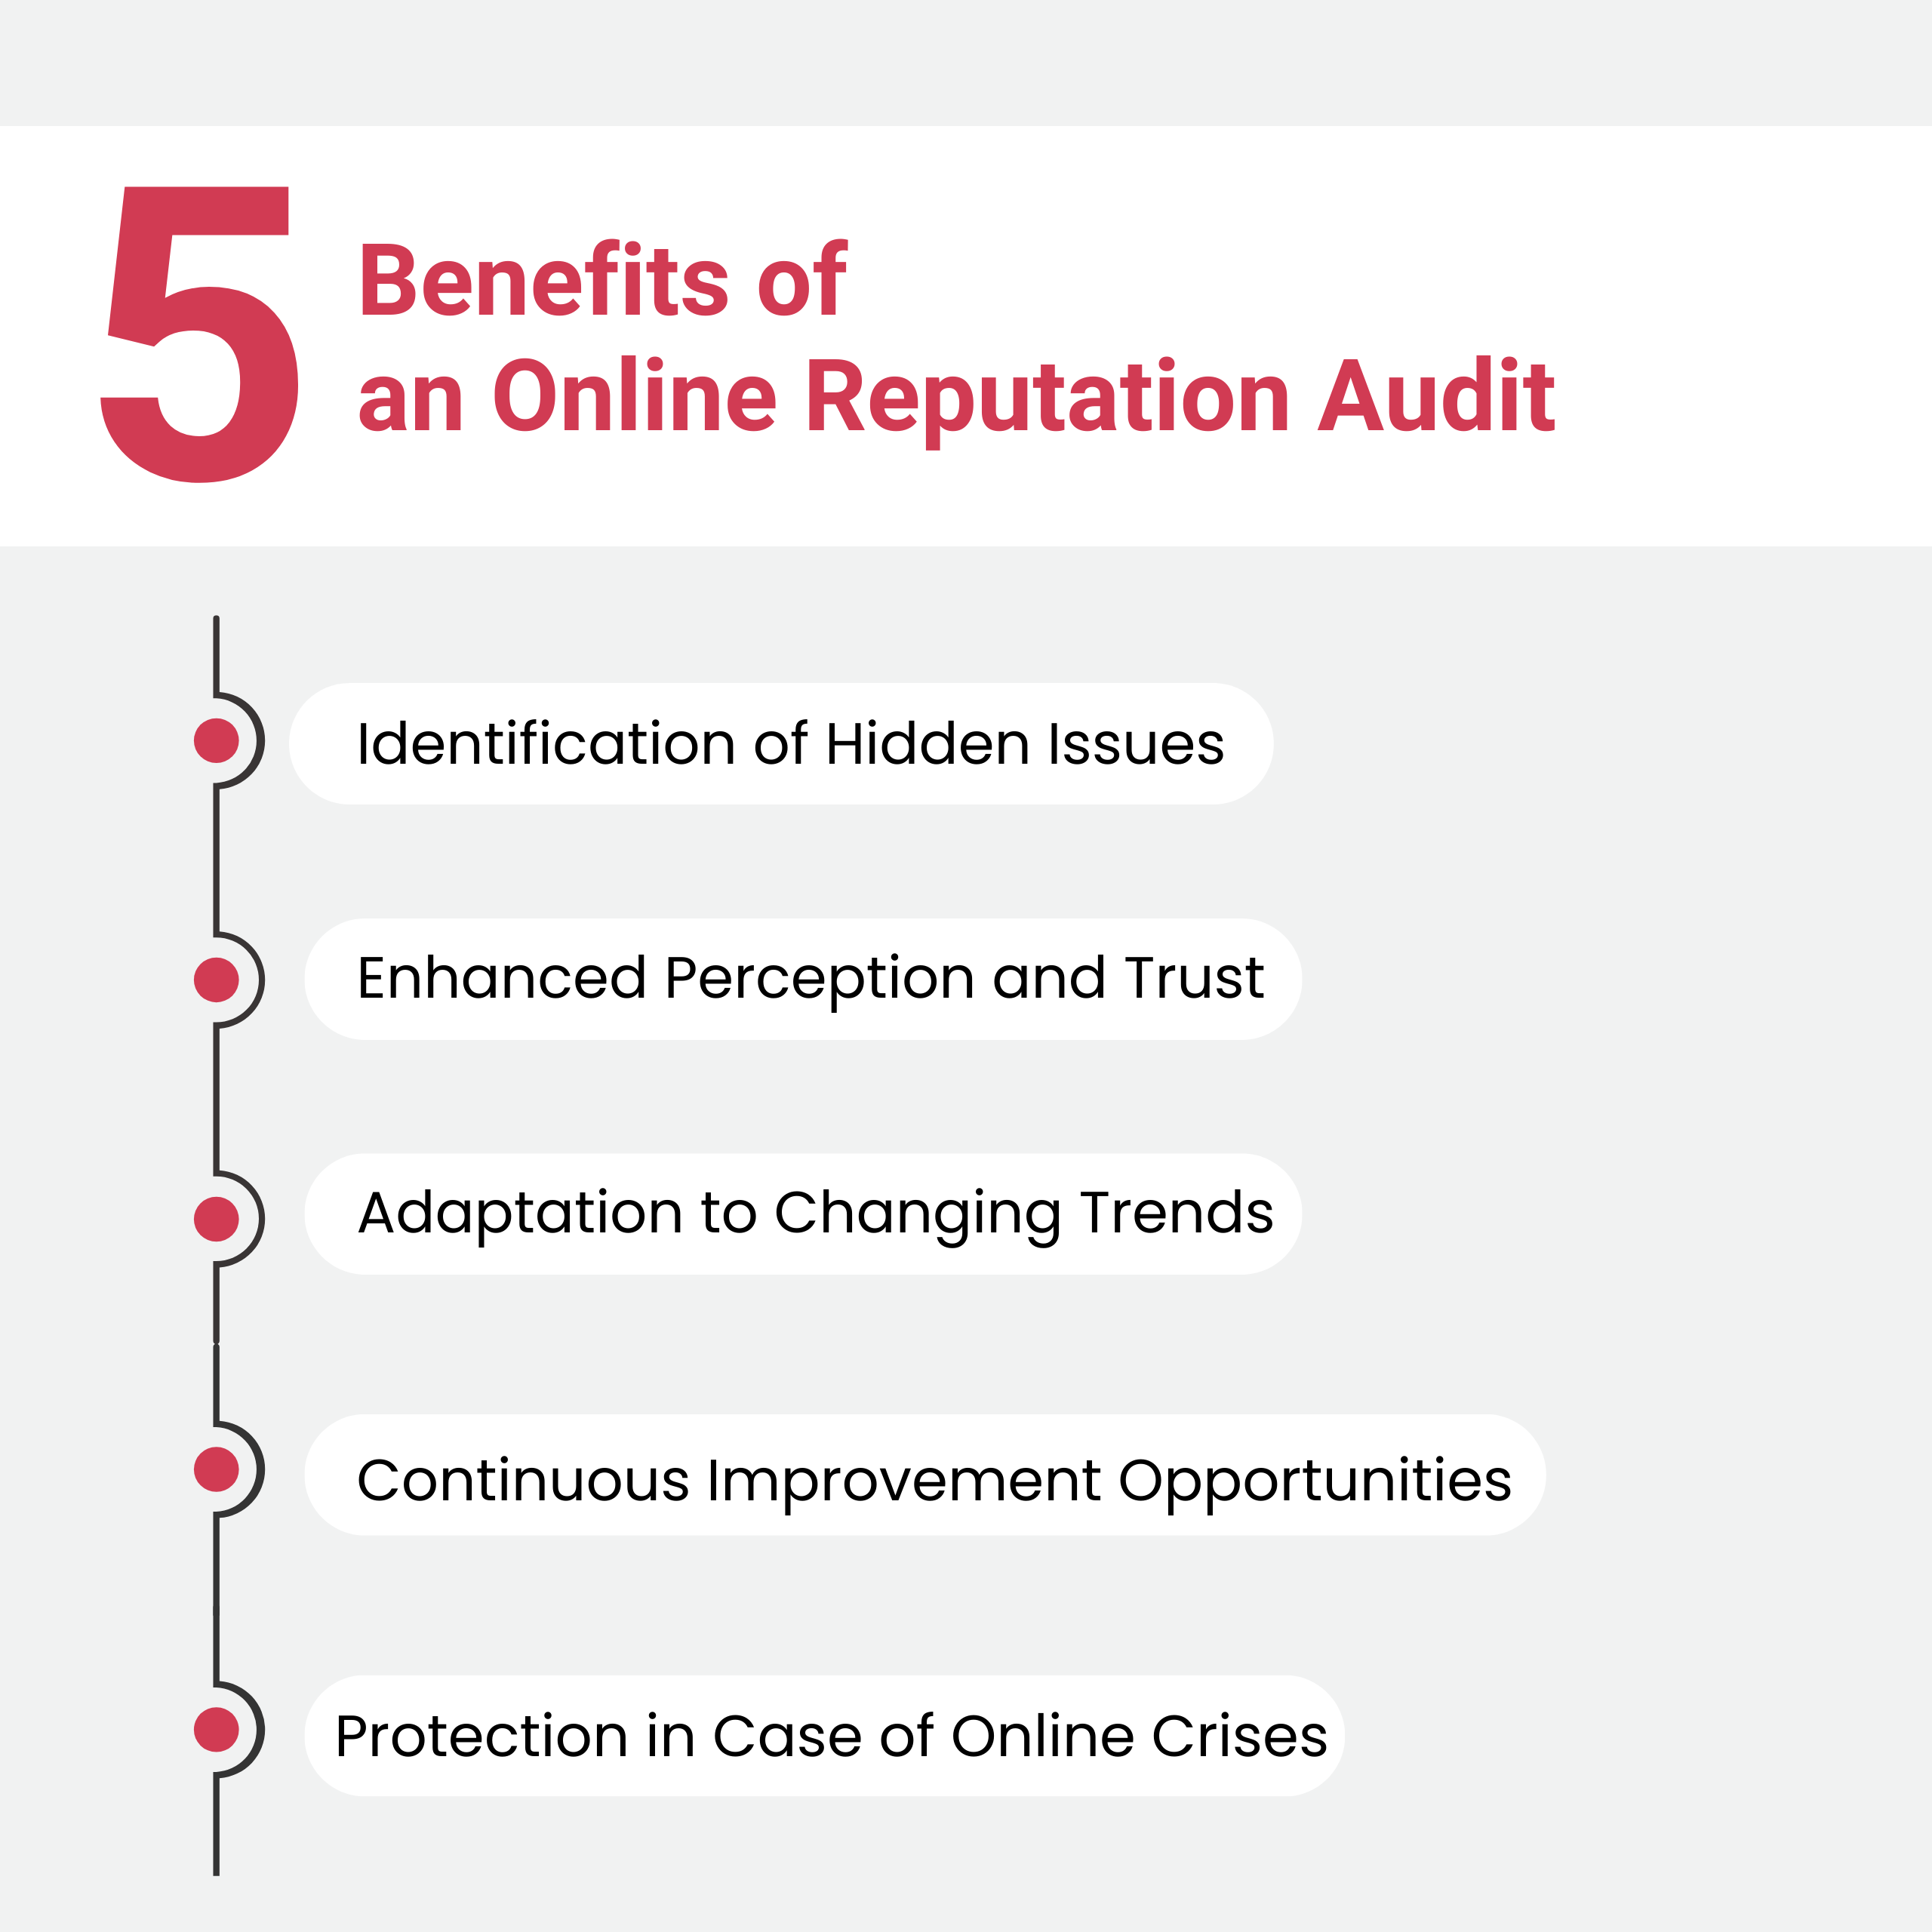 Benefits of an Online Reputation Audit